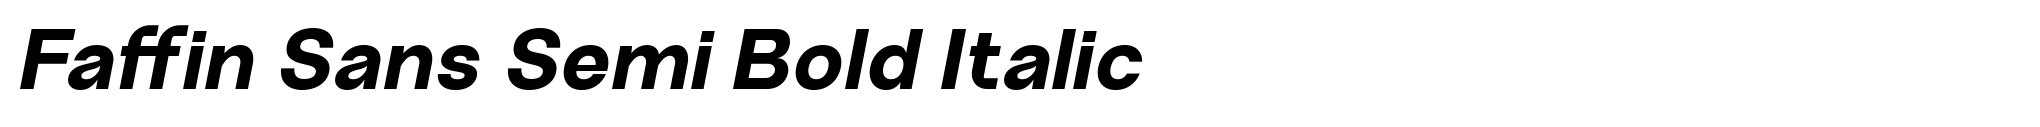 Faffin Sans Semi Bold Italic image